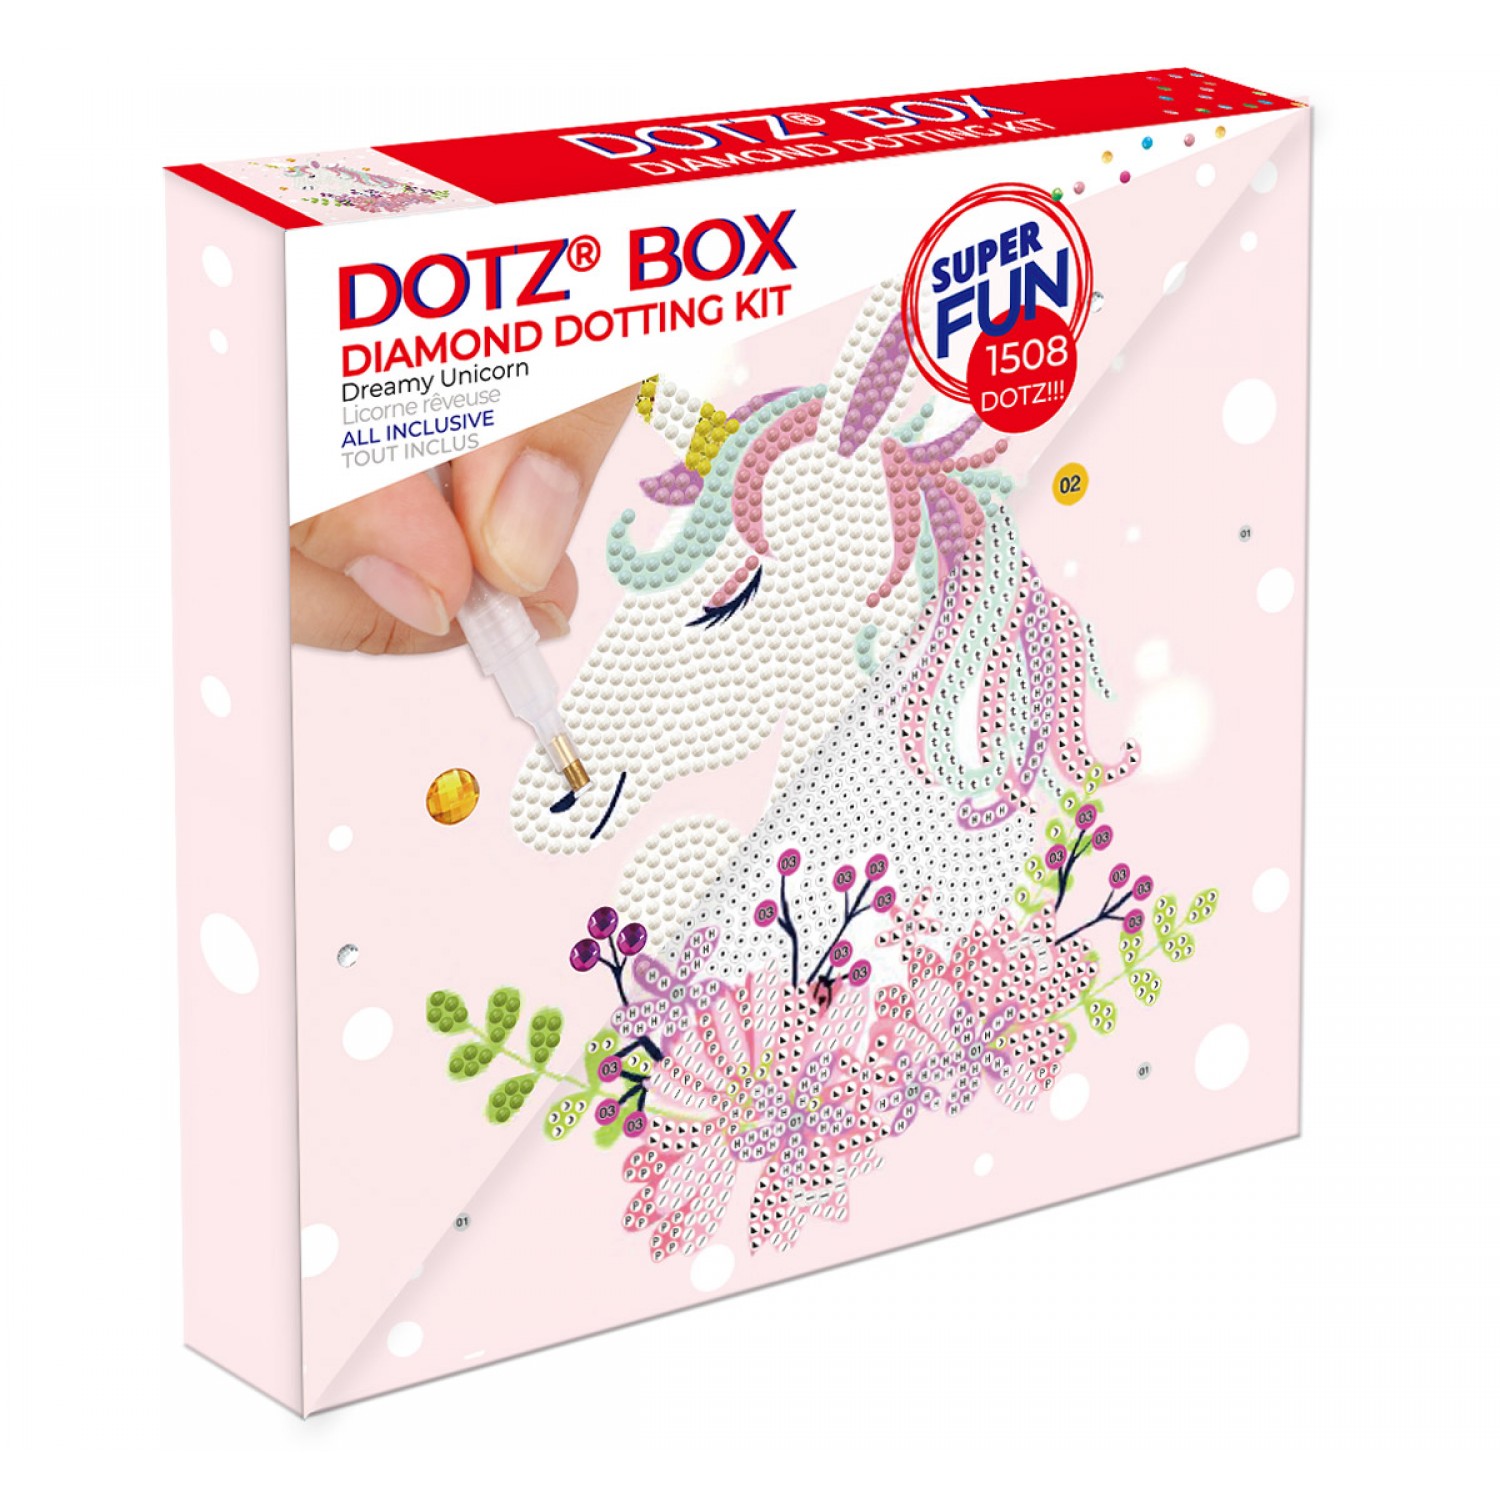 Innofans Diamond Painting Kit for Kids - Unicorn 5D Diamond Dotz